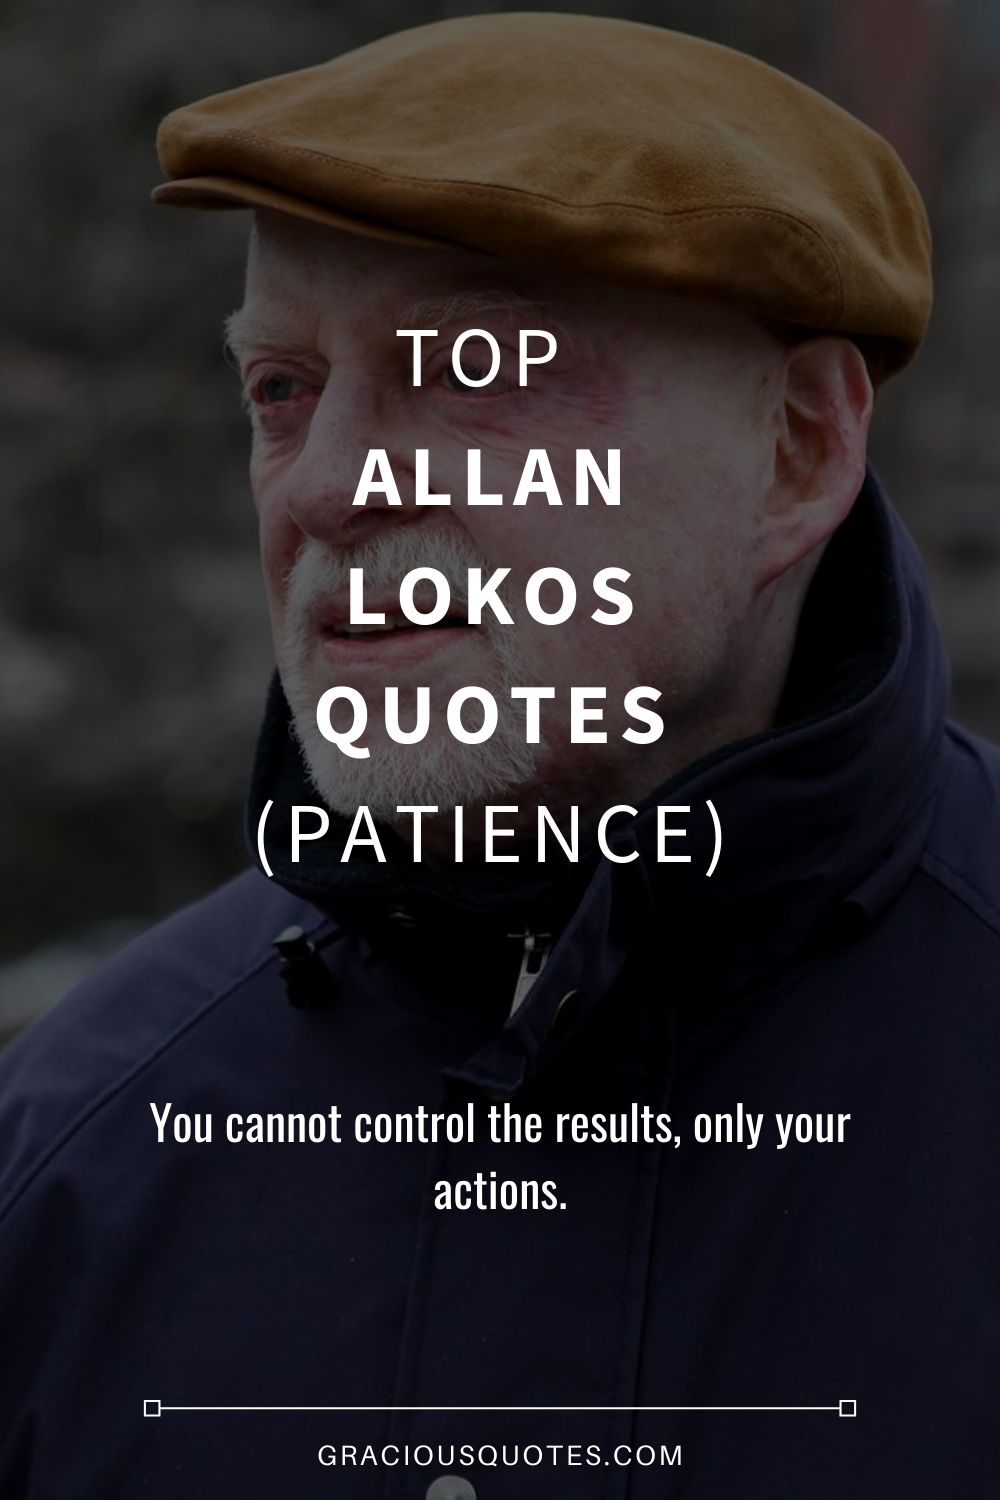 Top Allan Lokos Quotes (PATIENCE) - Gracious Quotes